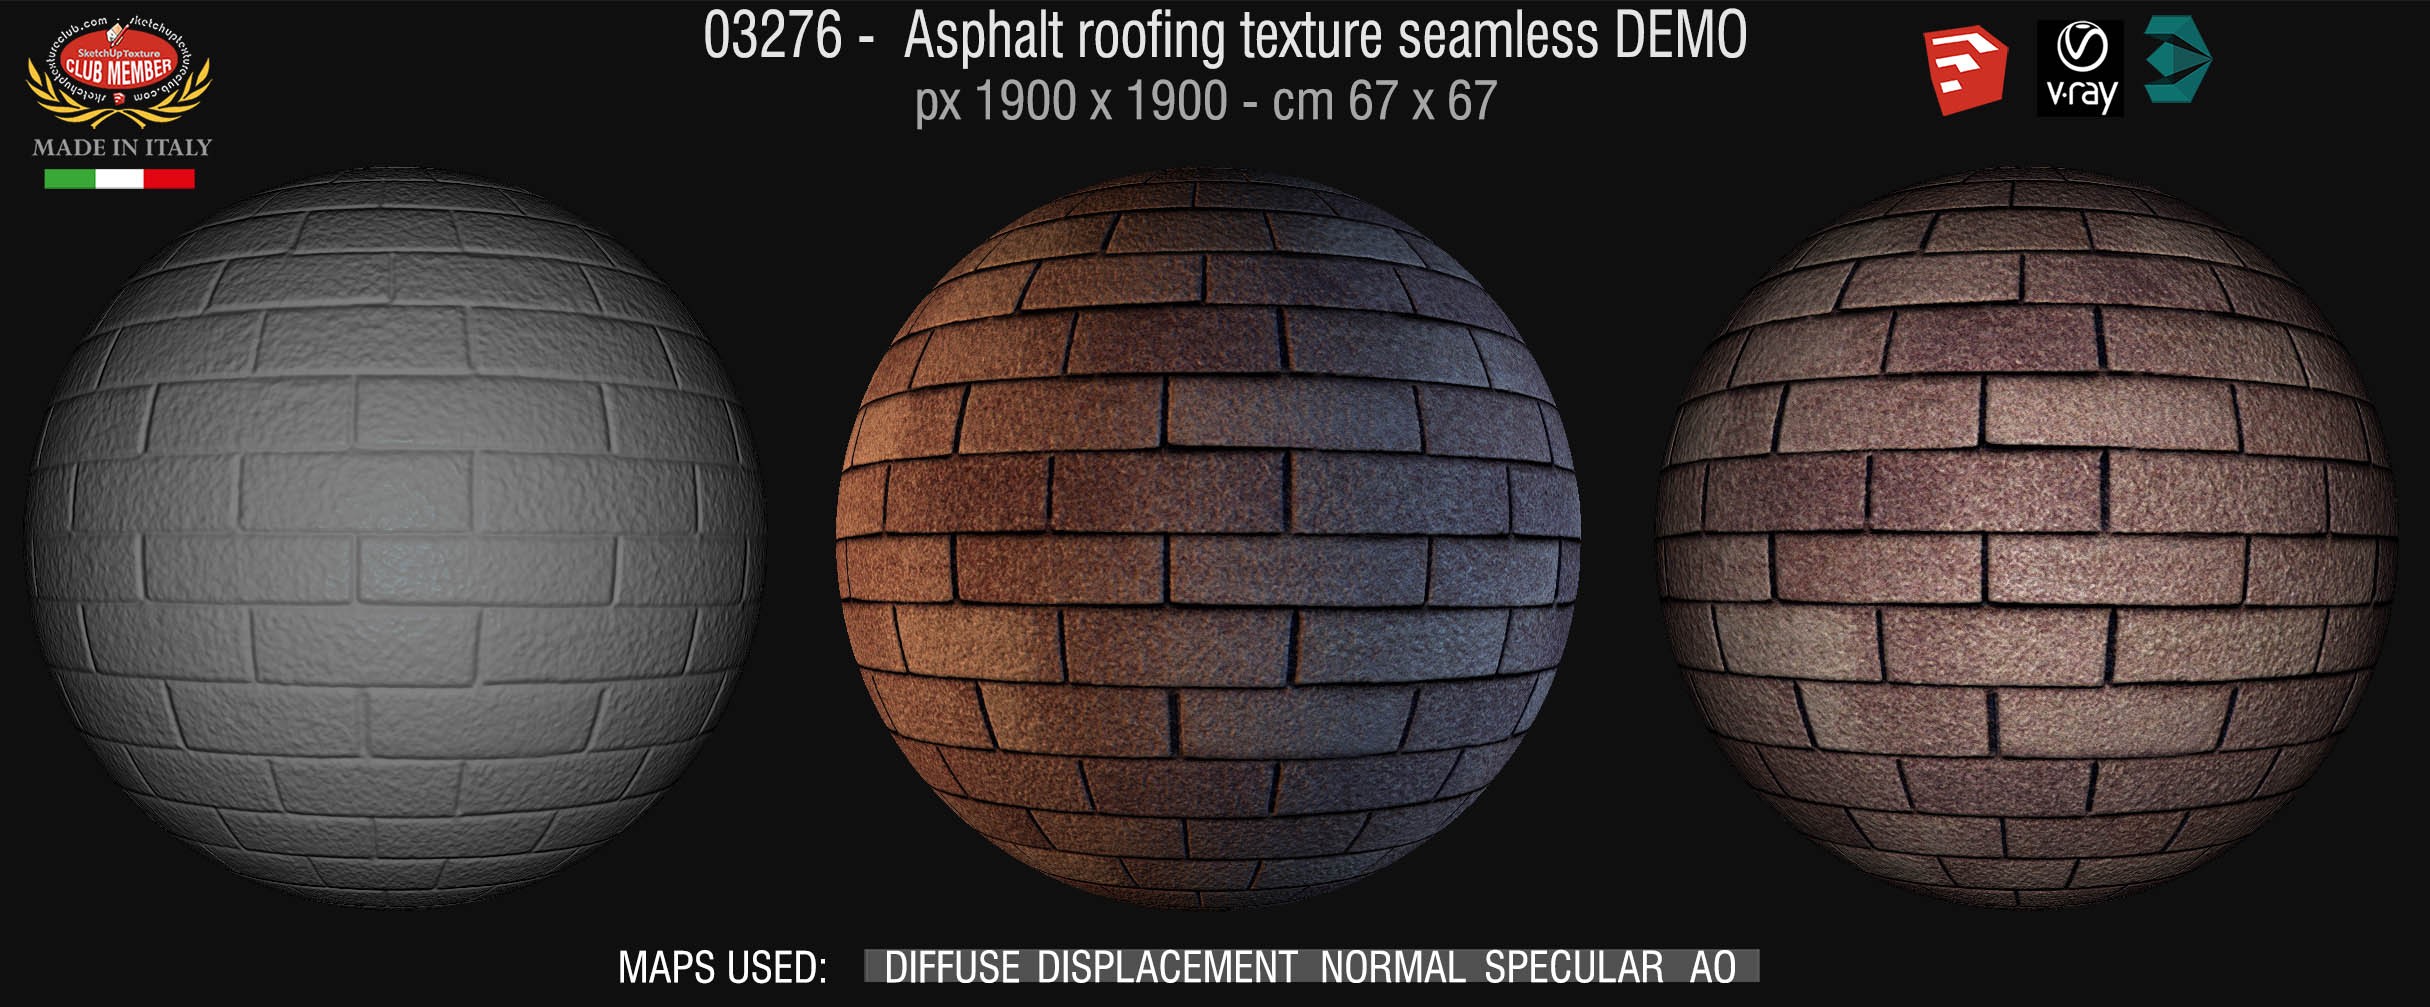 03276 Asphalt roofing texture + maps DEMO